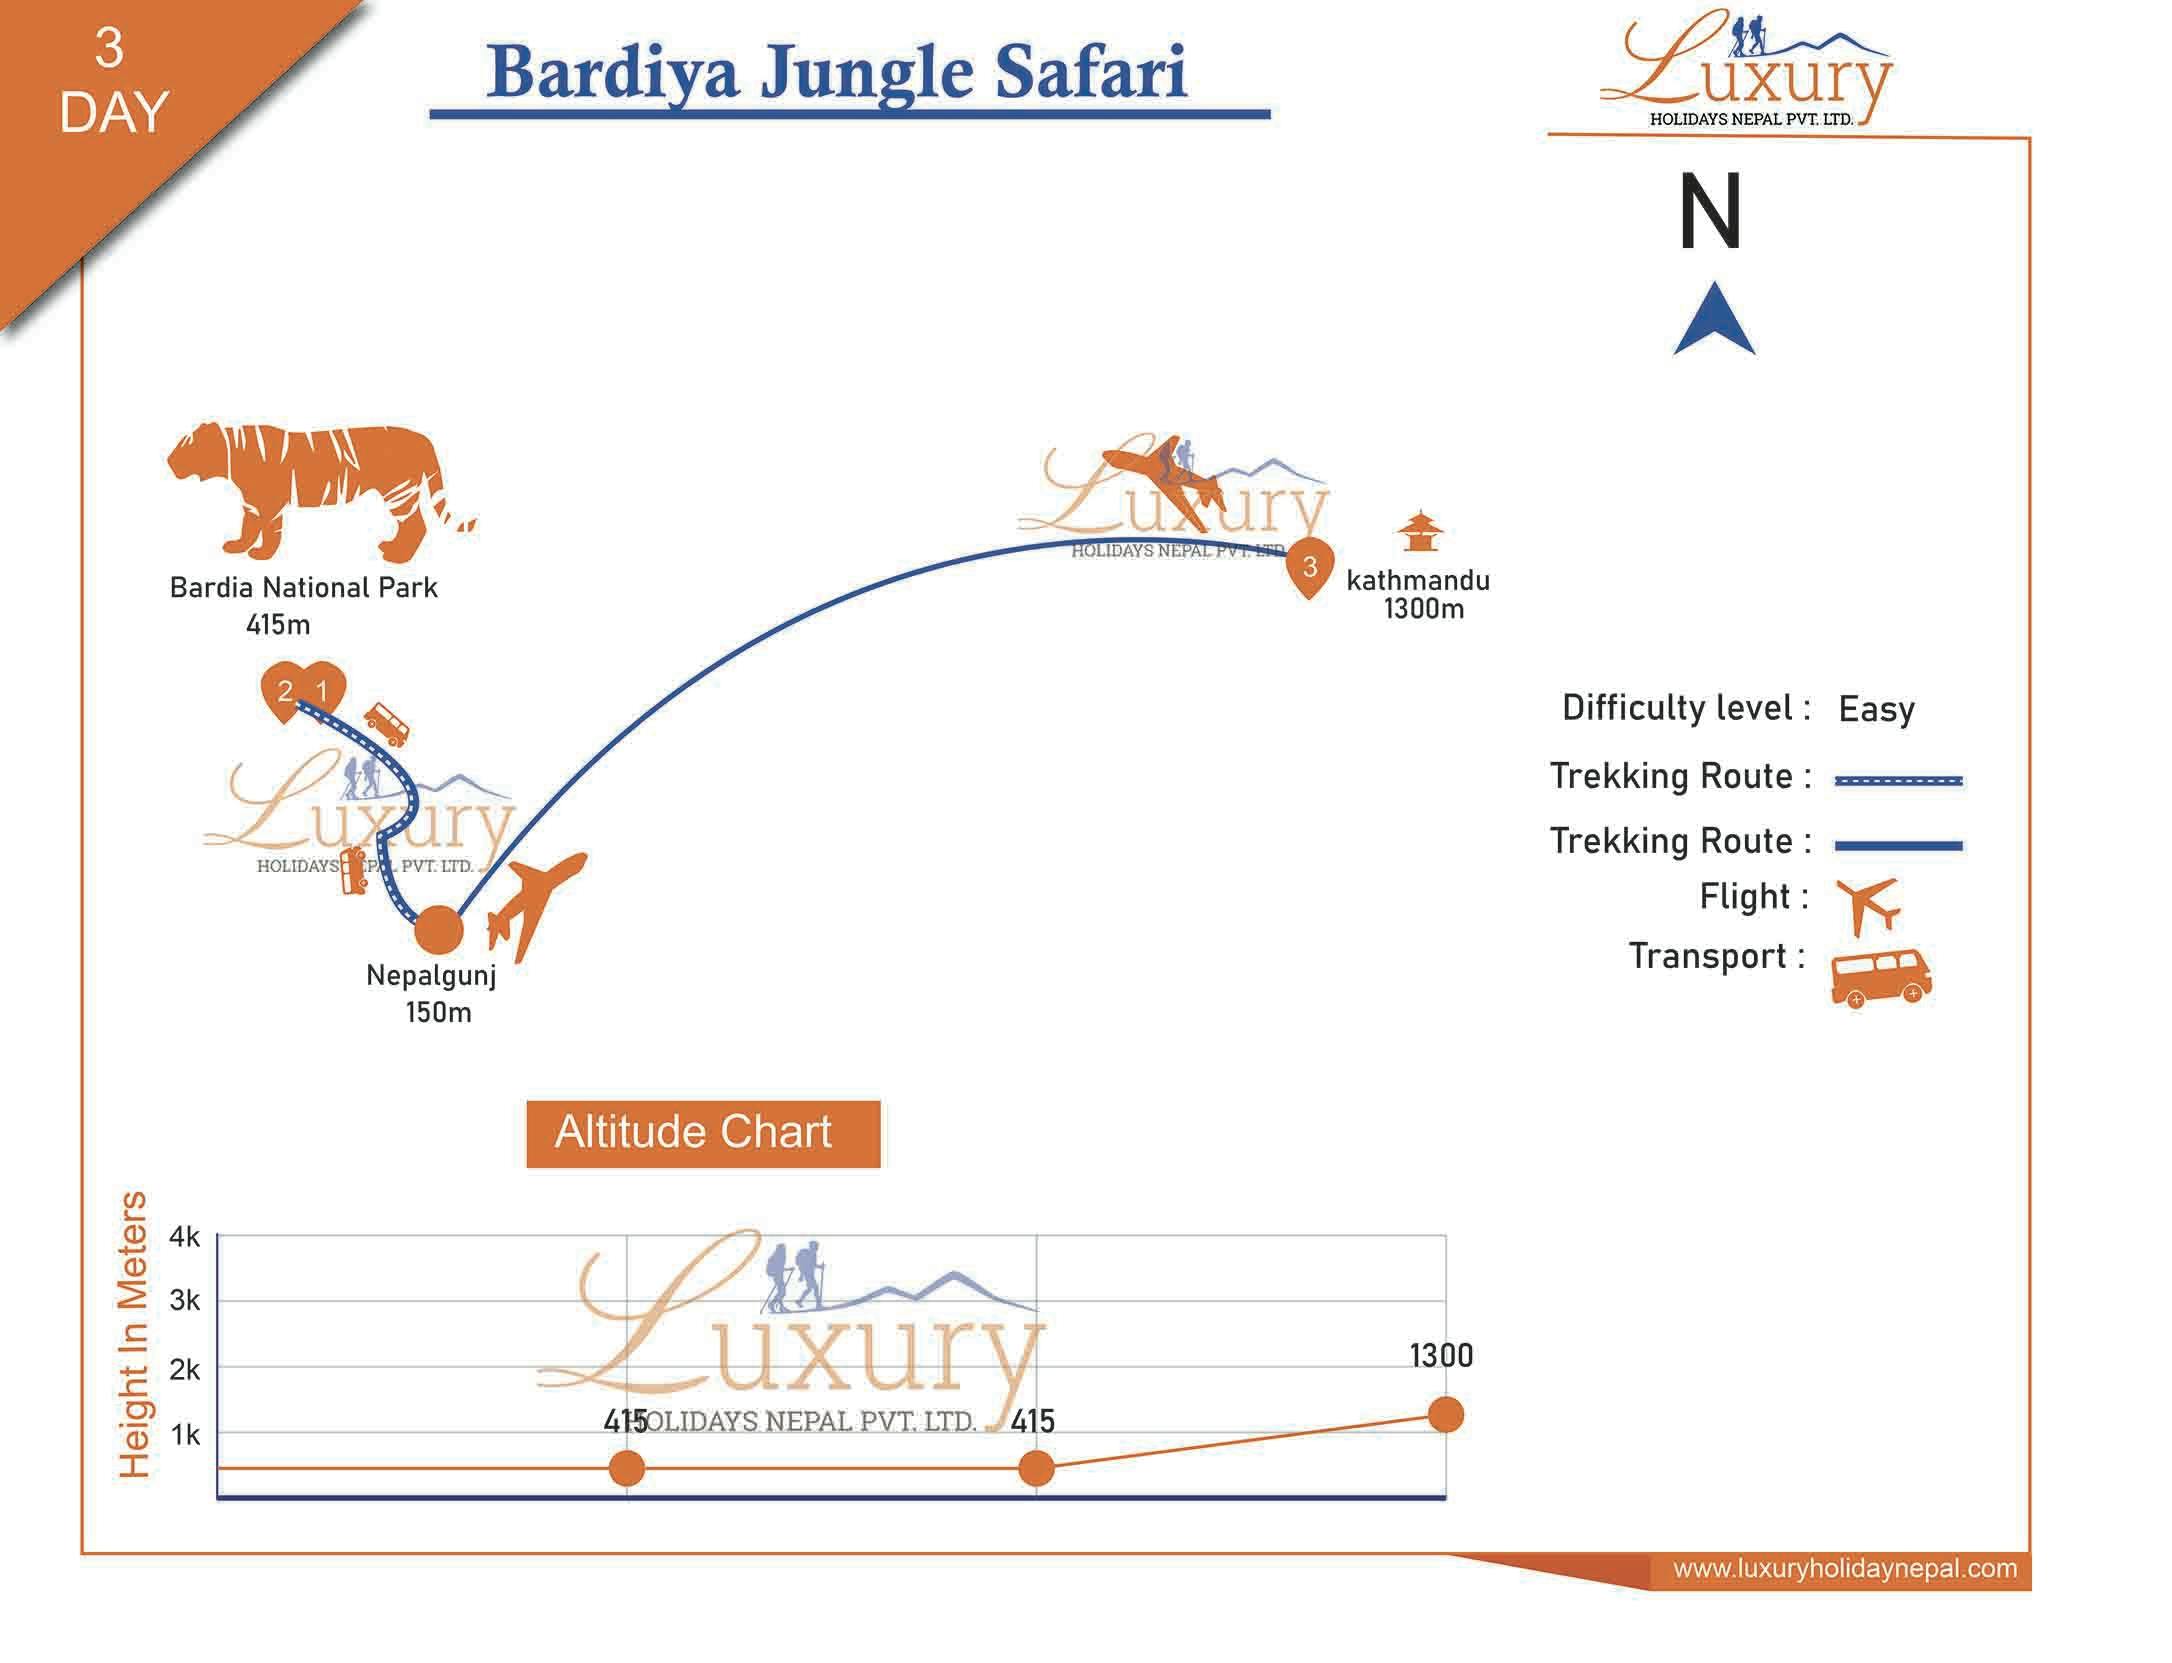 Bardiya National Park Safari 4 DaysMap